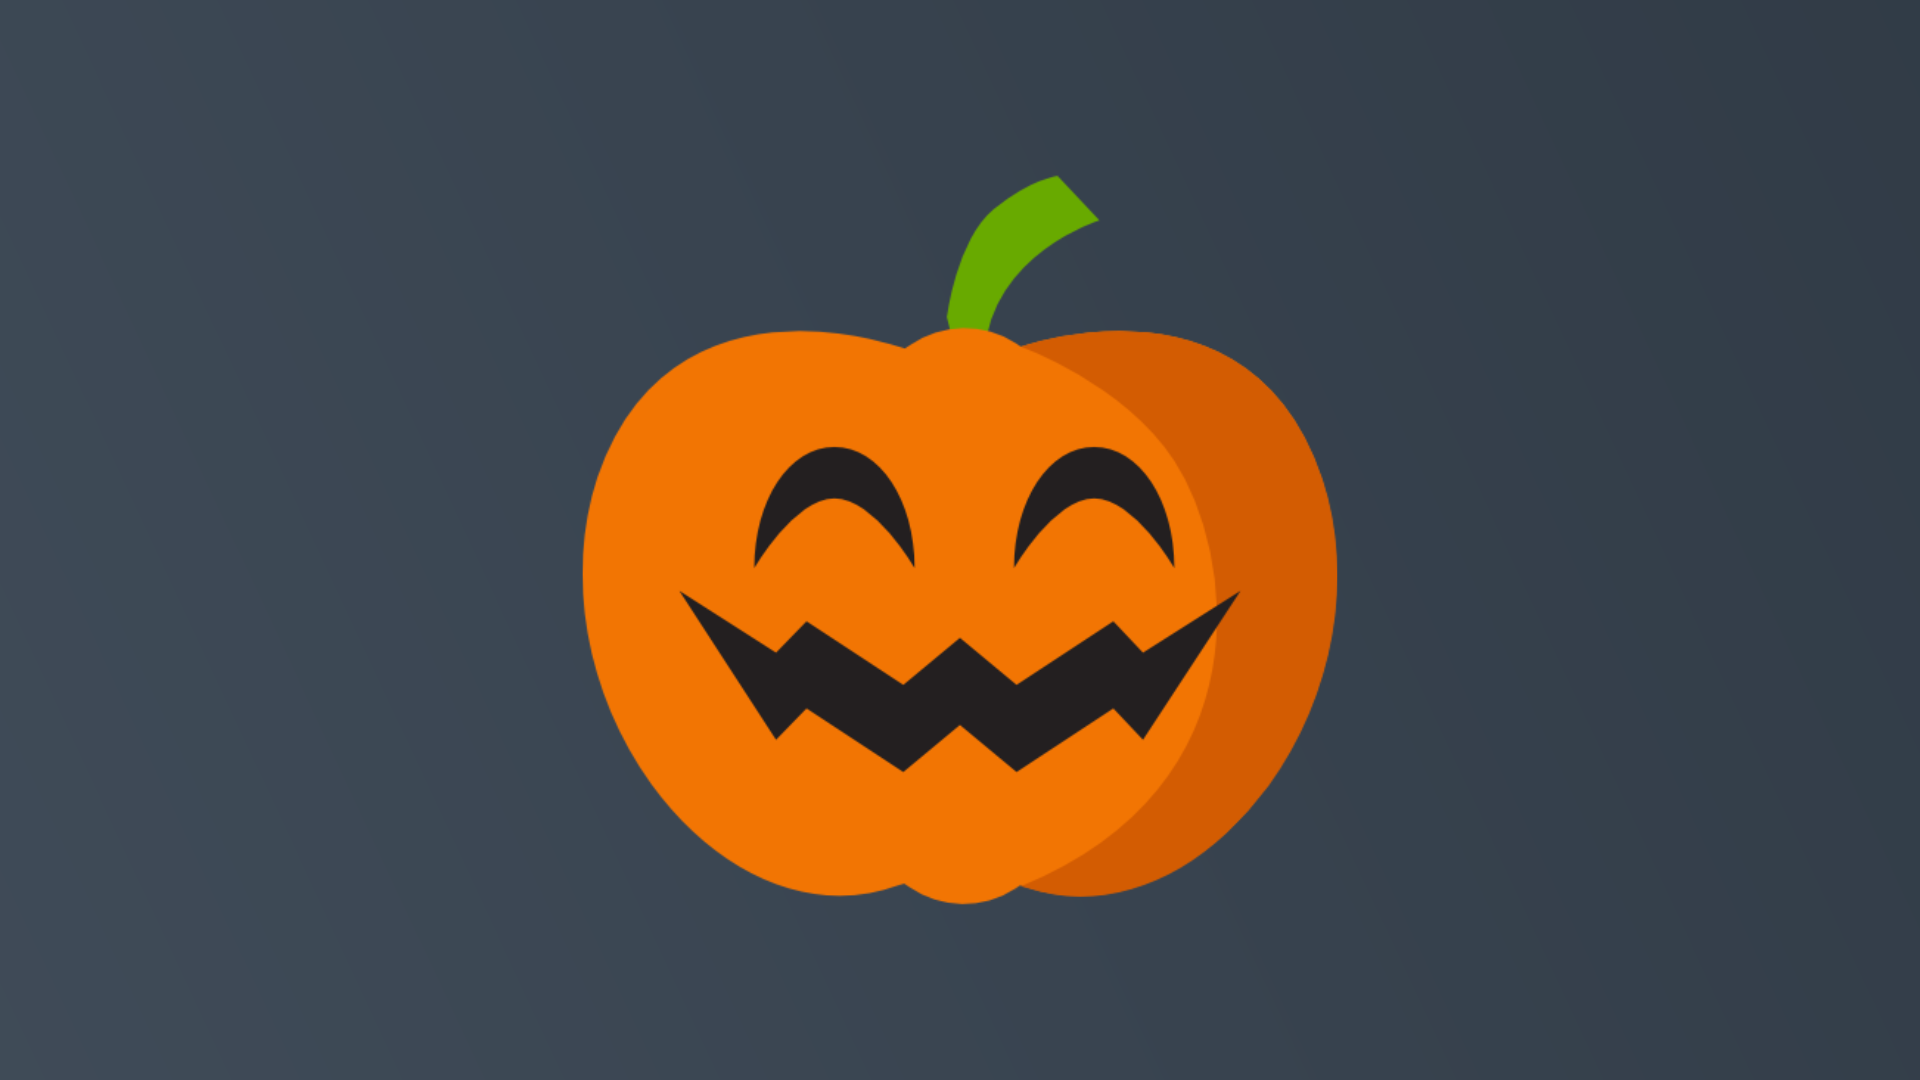 Real estate Halloween marketing ideas (don't sleep on these spooky tactics)